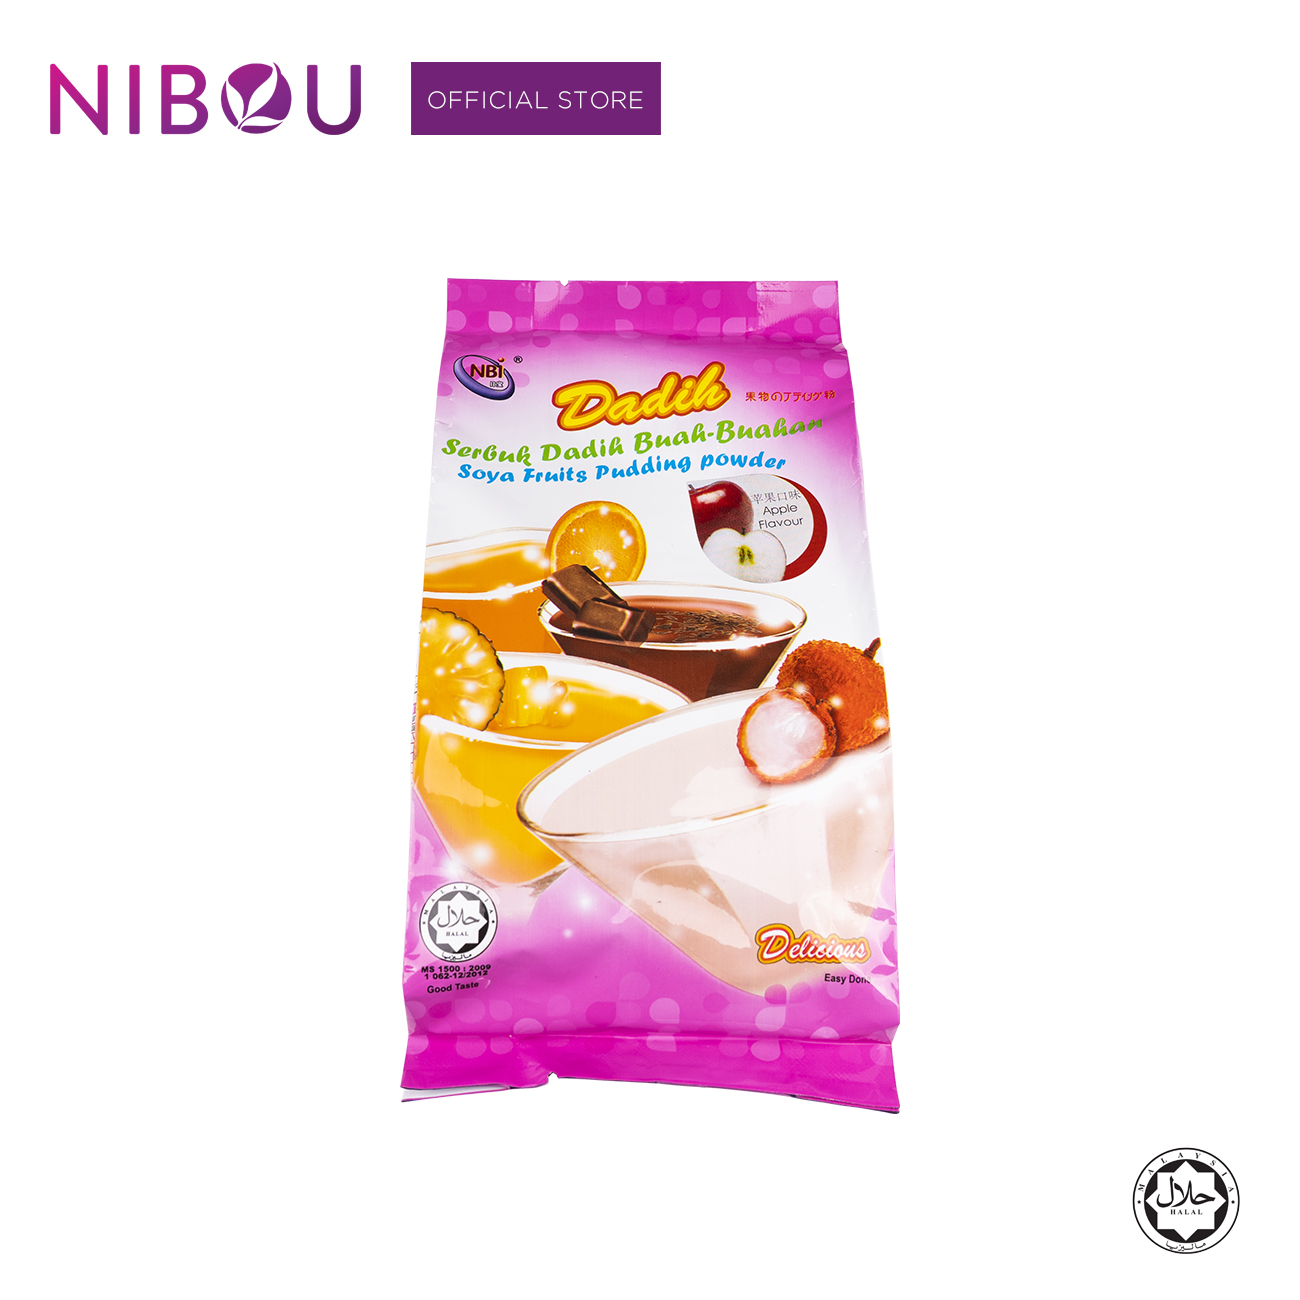 Nibou (NBI) DADIH Soya Fruits Apple Pudding Powder (380gm X 24)